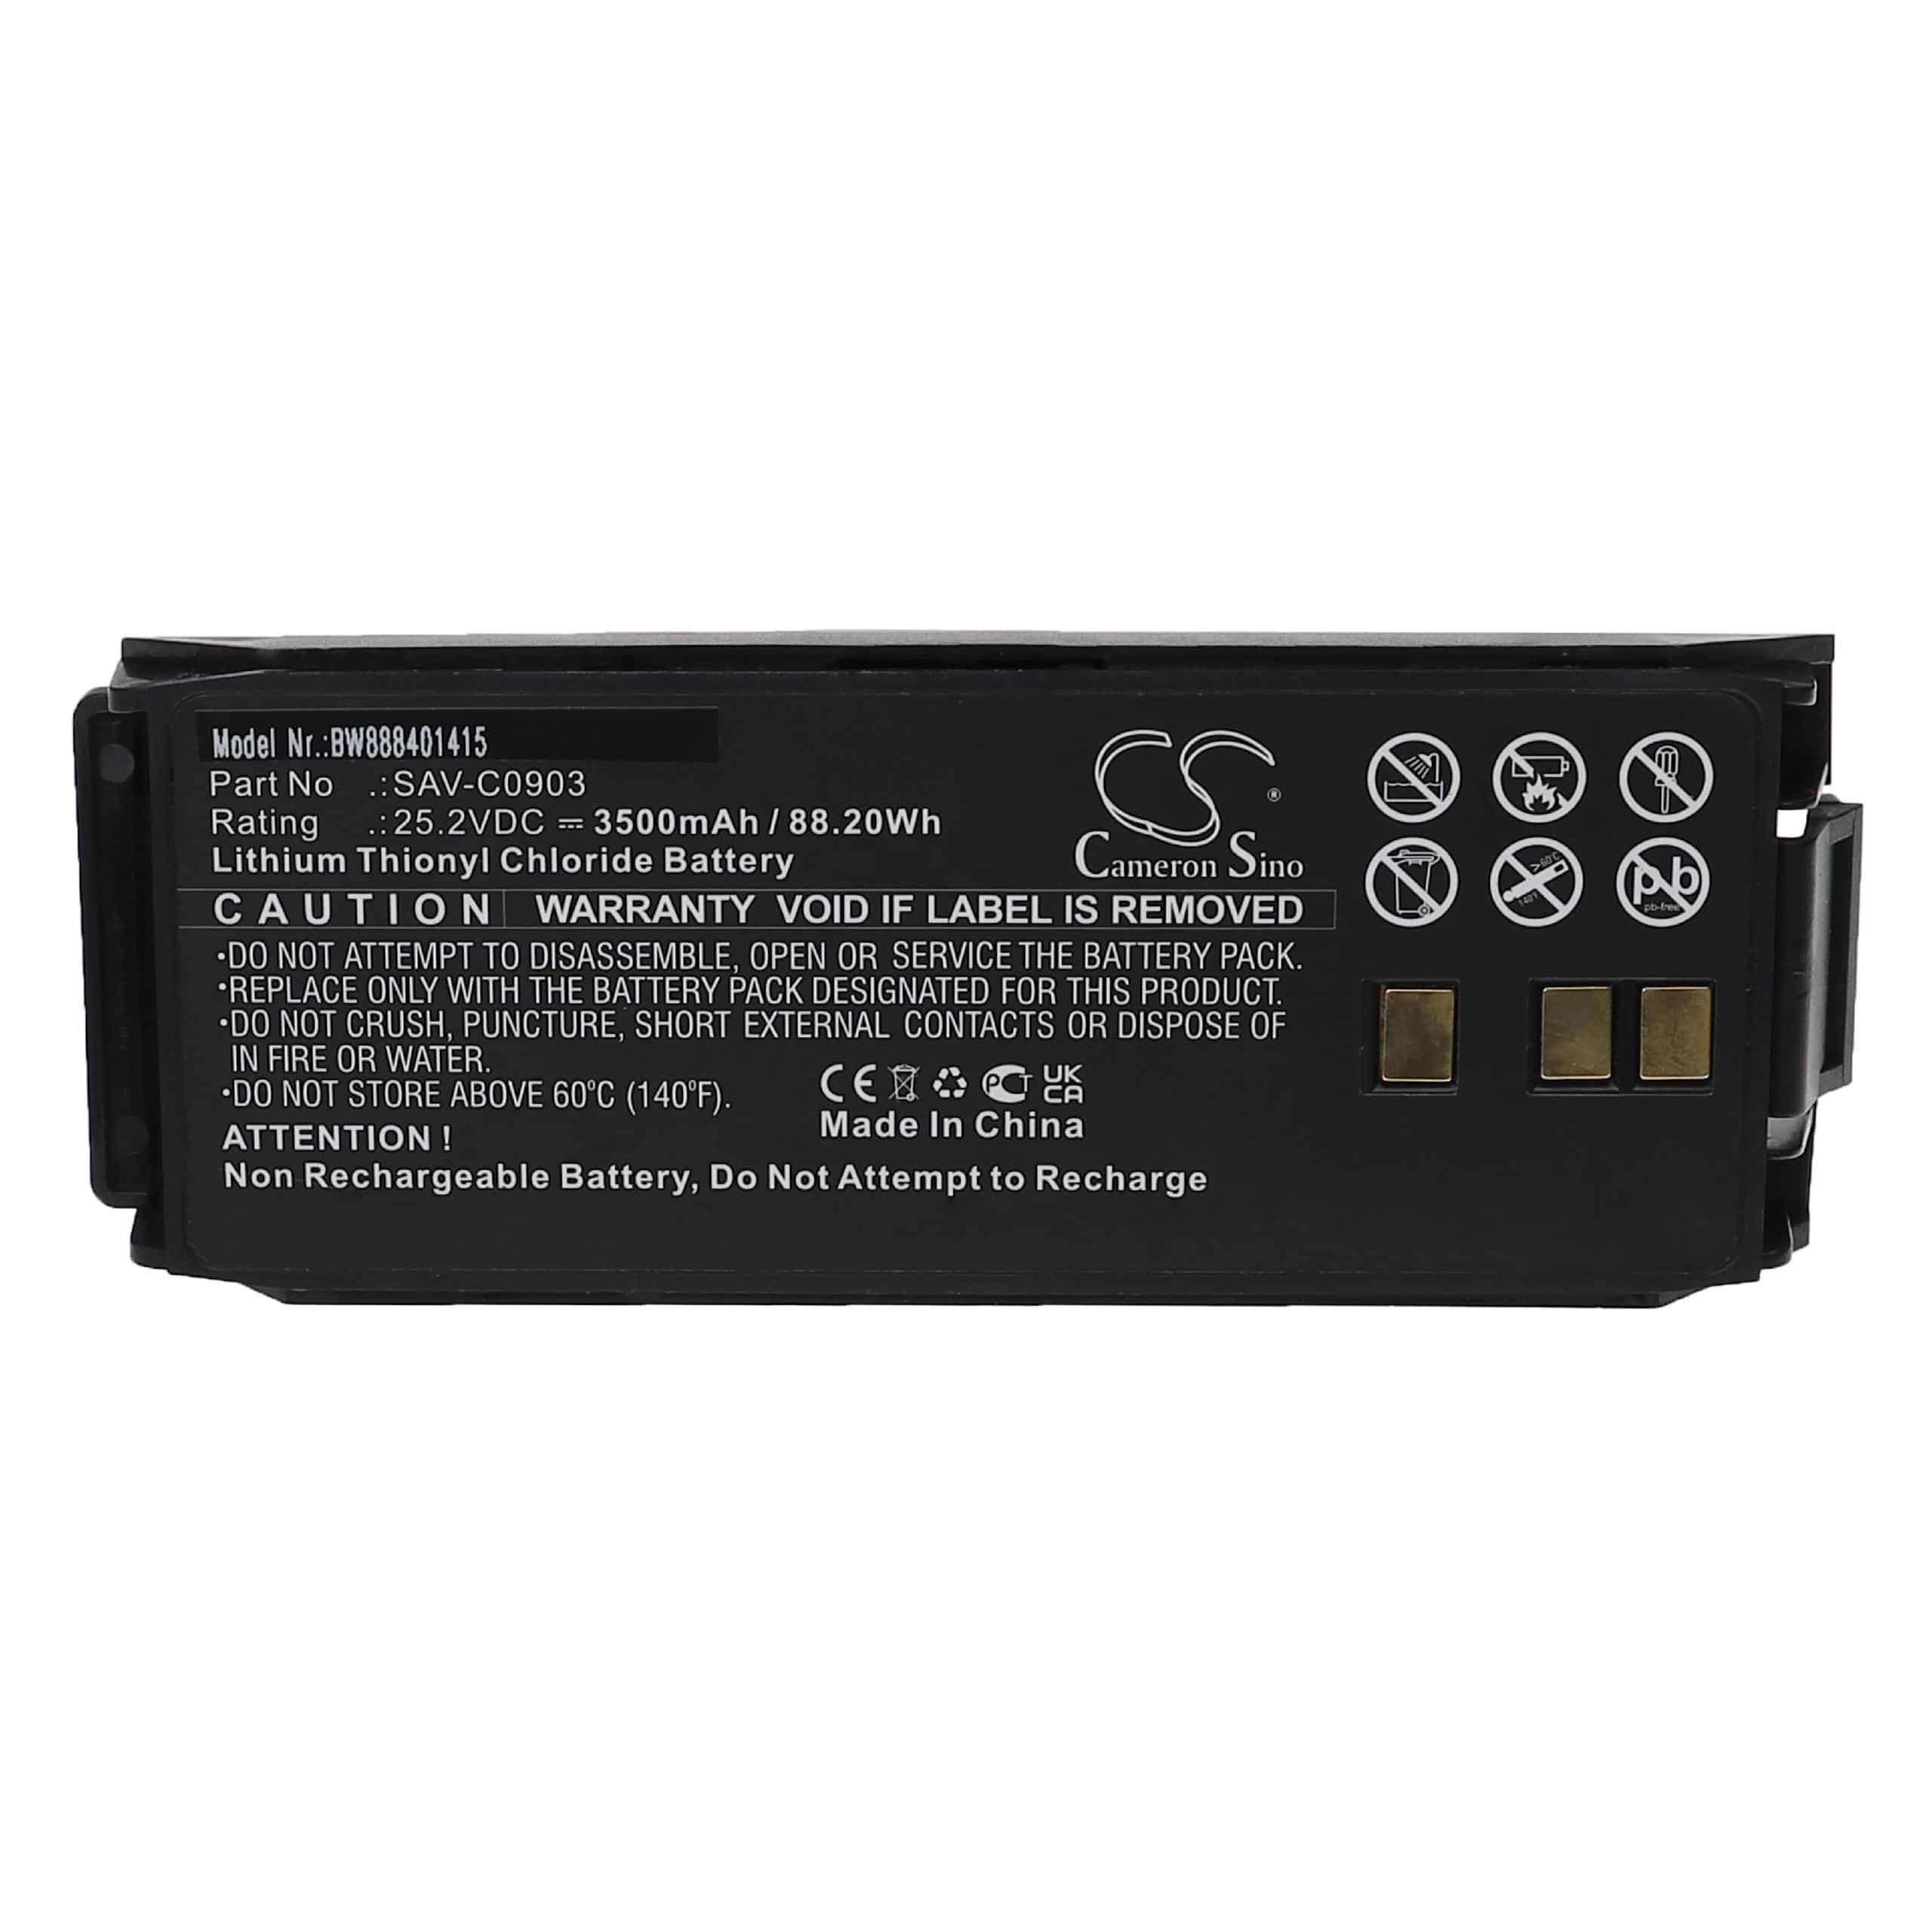 Medical Equipment Battery Replacement for Saver One SAV-C0903 - 3500mAh 25.2V Li-SOCl2